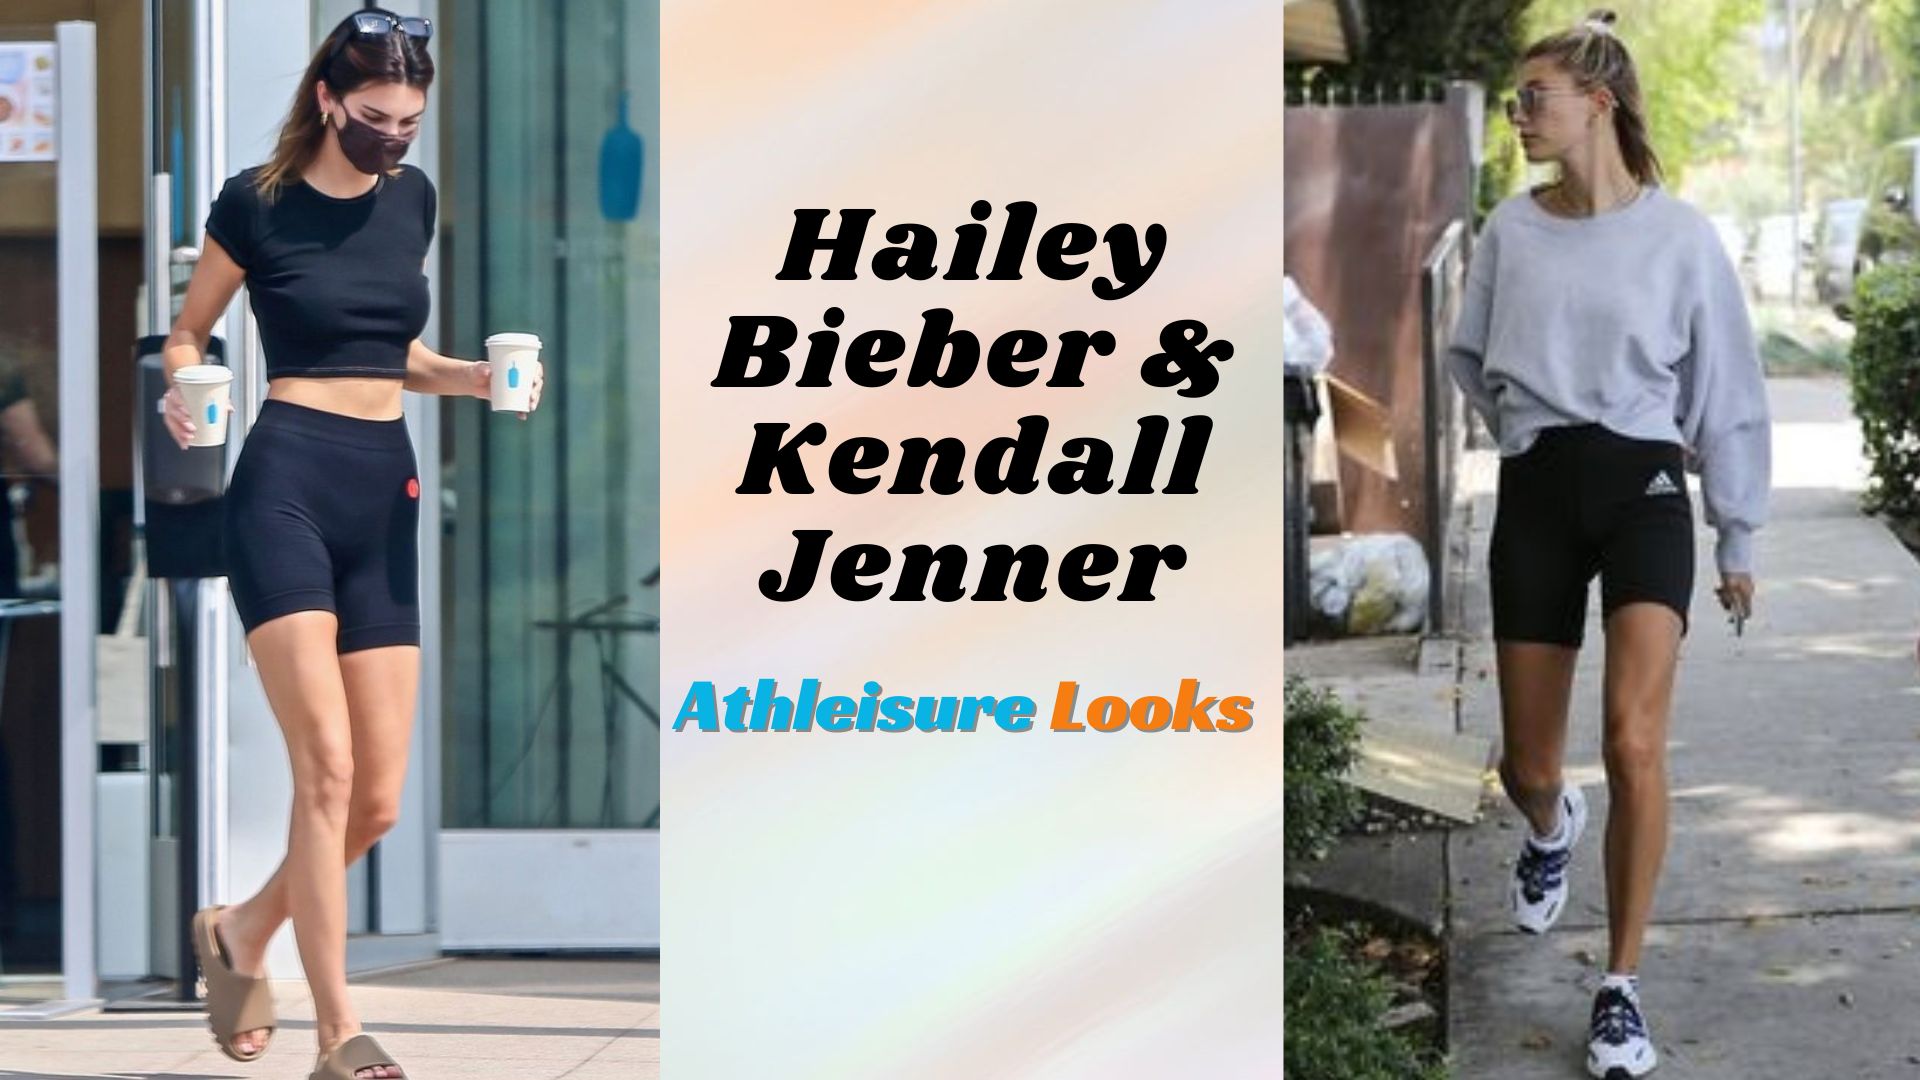 Hailey Bieber & Kendall Jenner Athleisure Looks